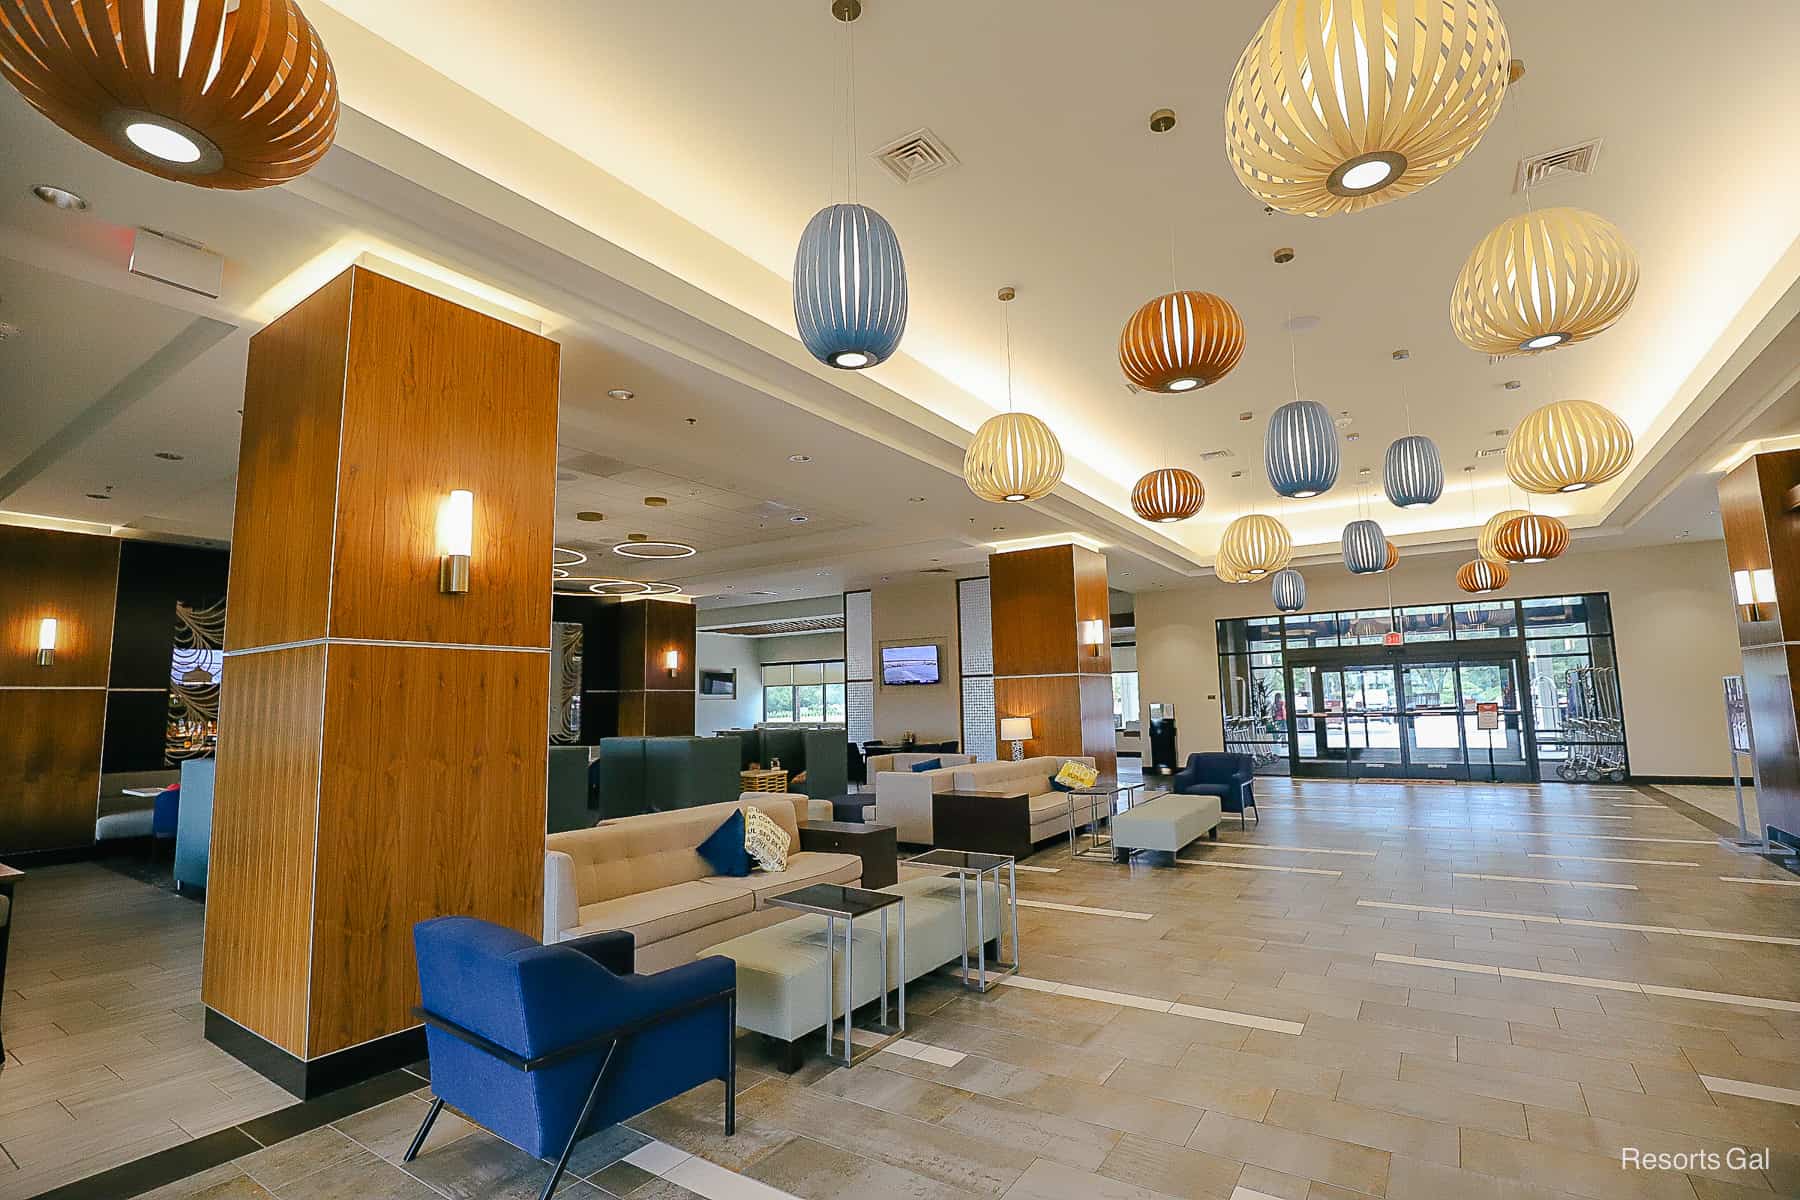 The Drury Hotel lobby with globe lantern light fixtures. 